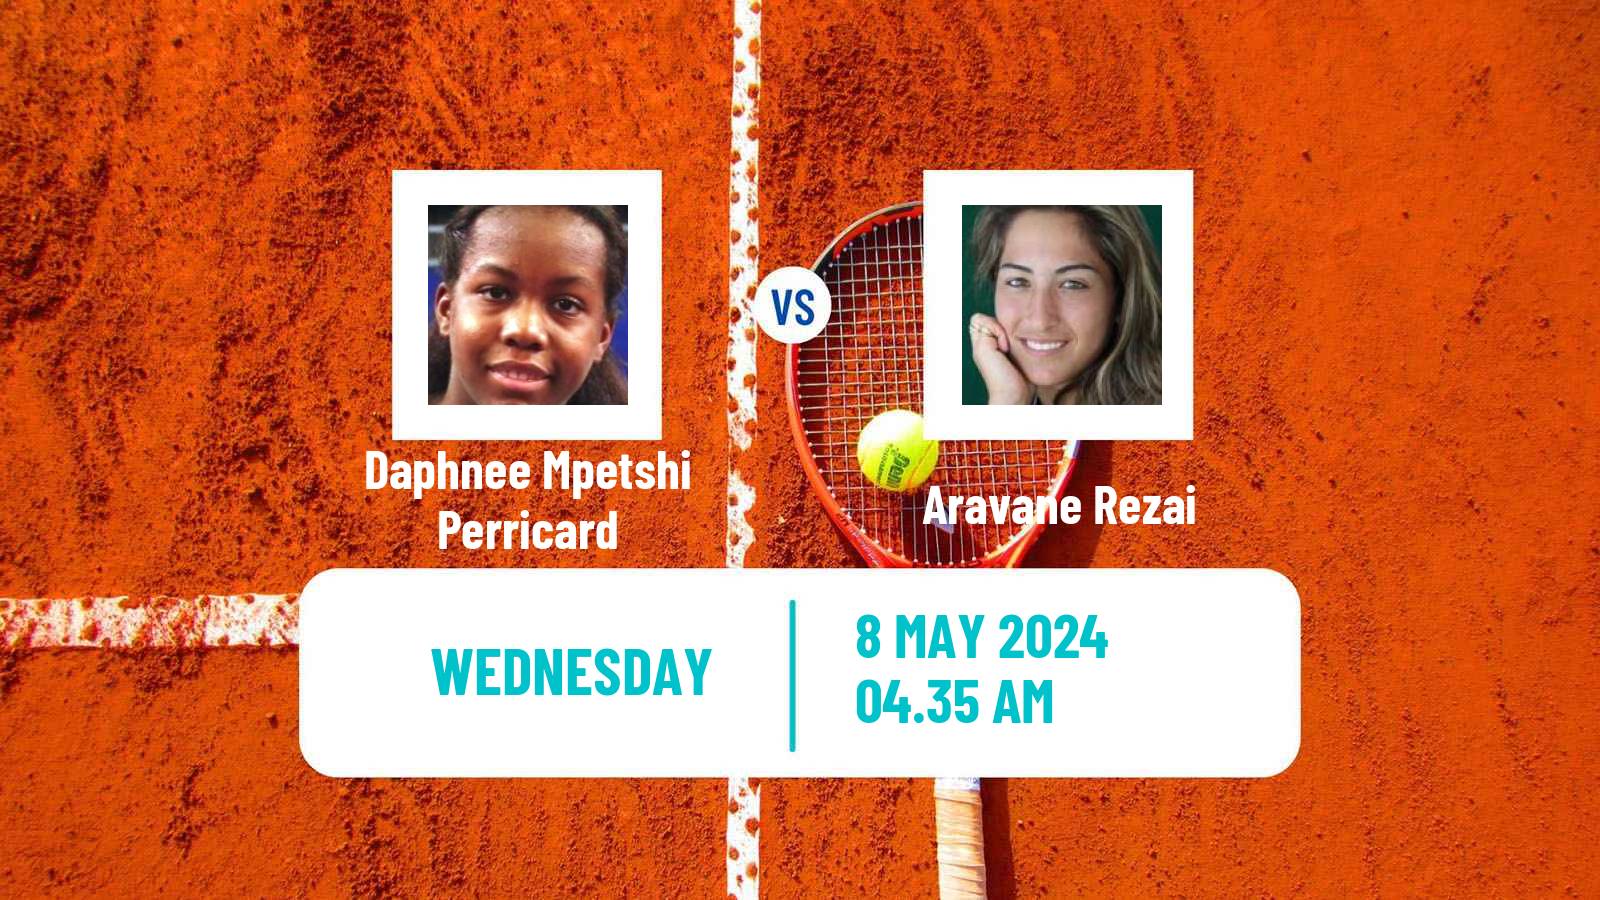 Tennis ITF W75 H Saint Gaudens Women Daphnee Mpetshi Perricard - Aravane Rezai